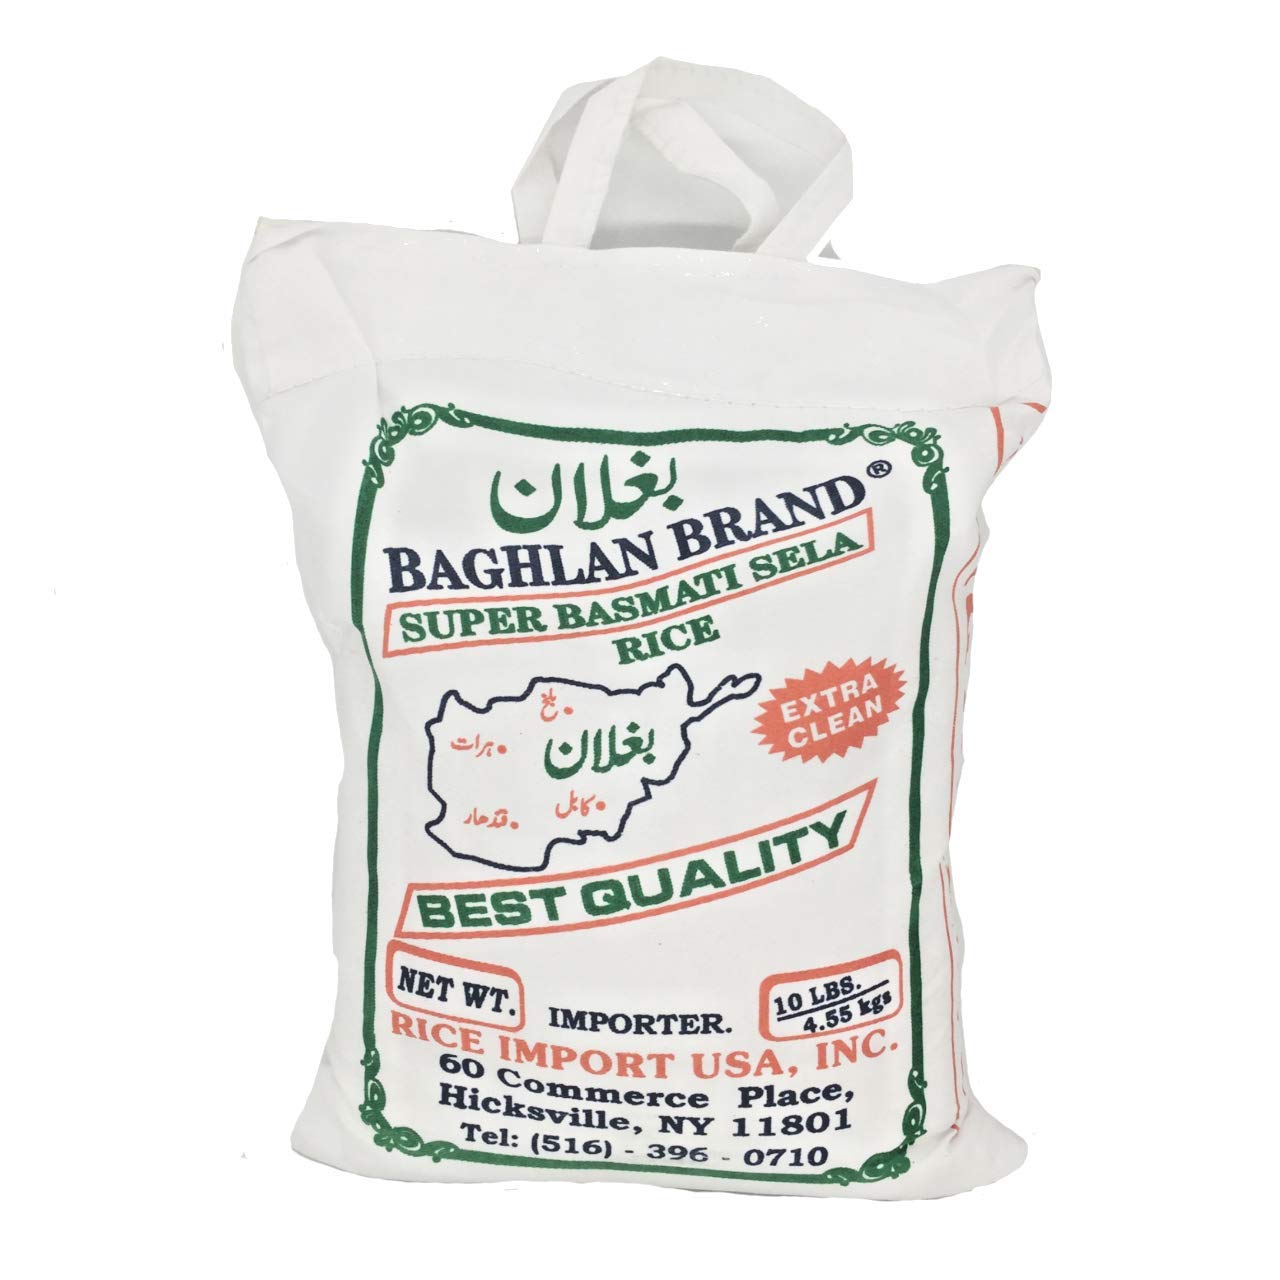 Baghlan Brand Super Basmati Sela Rice in Ceres Grocery